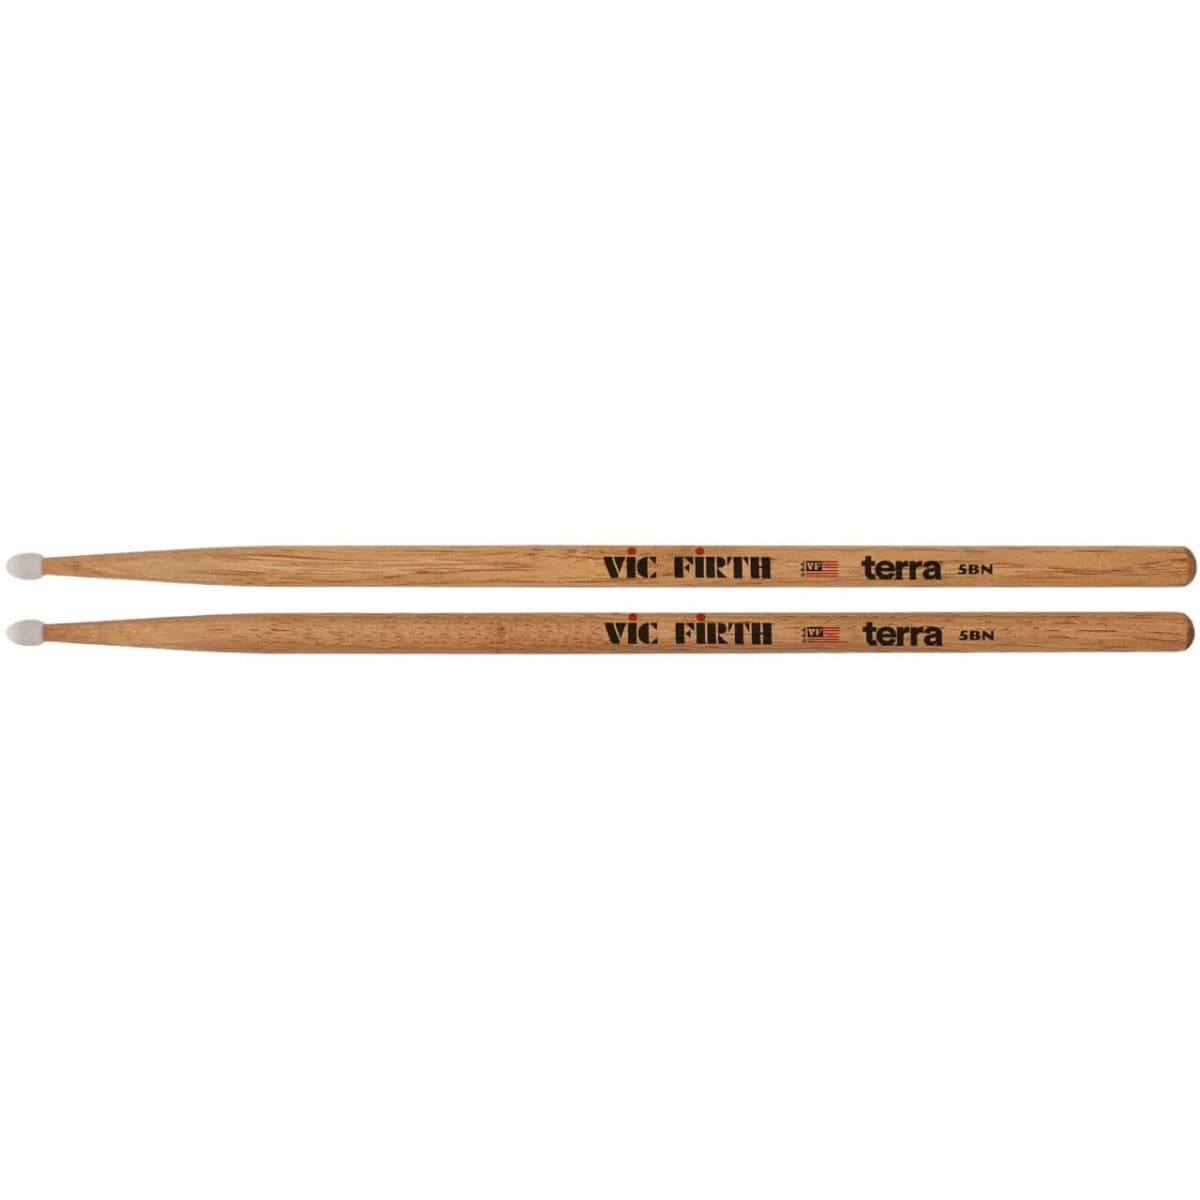 Vic Firth American Classic 5BTN Terra Series Drumsticks, 4pr Value Pack